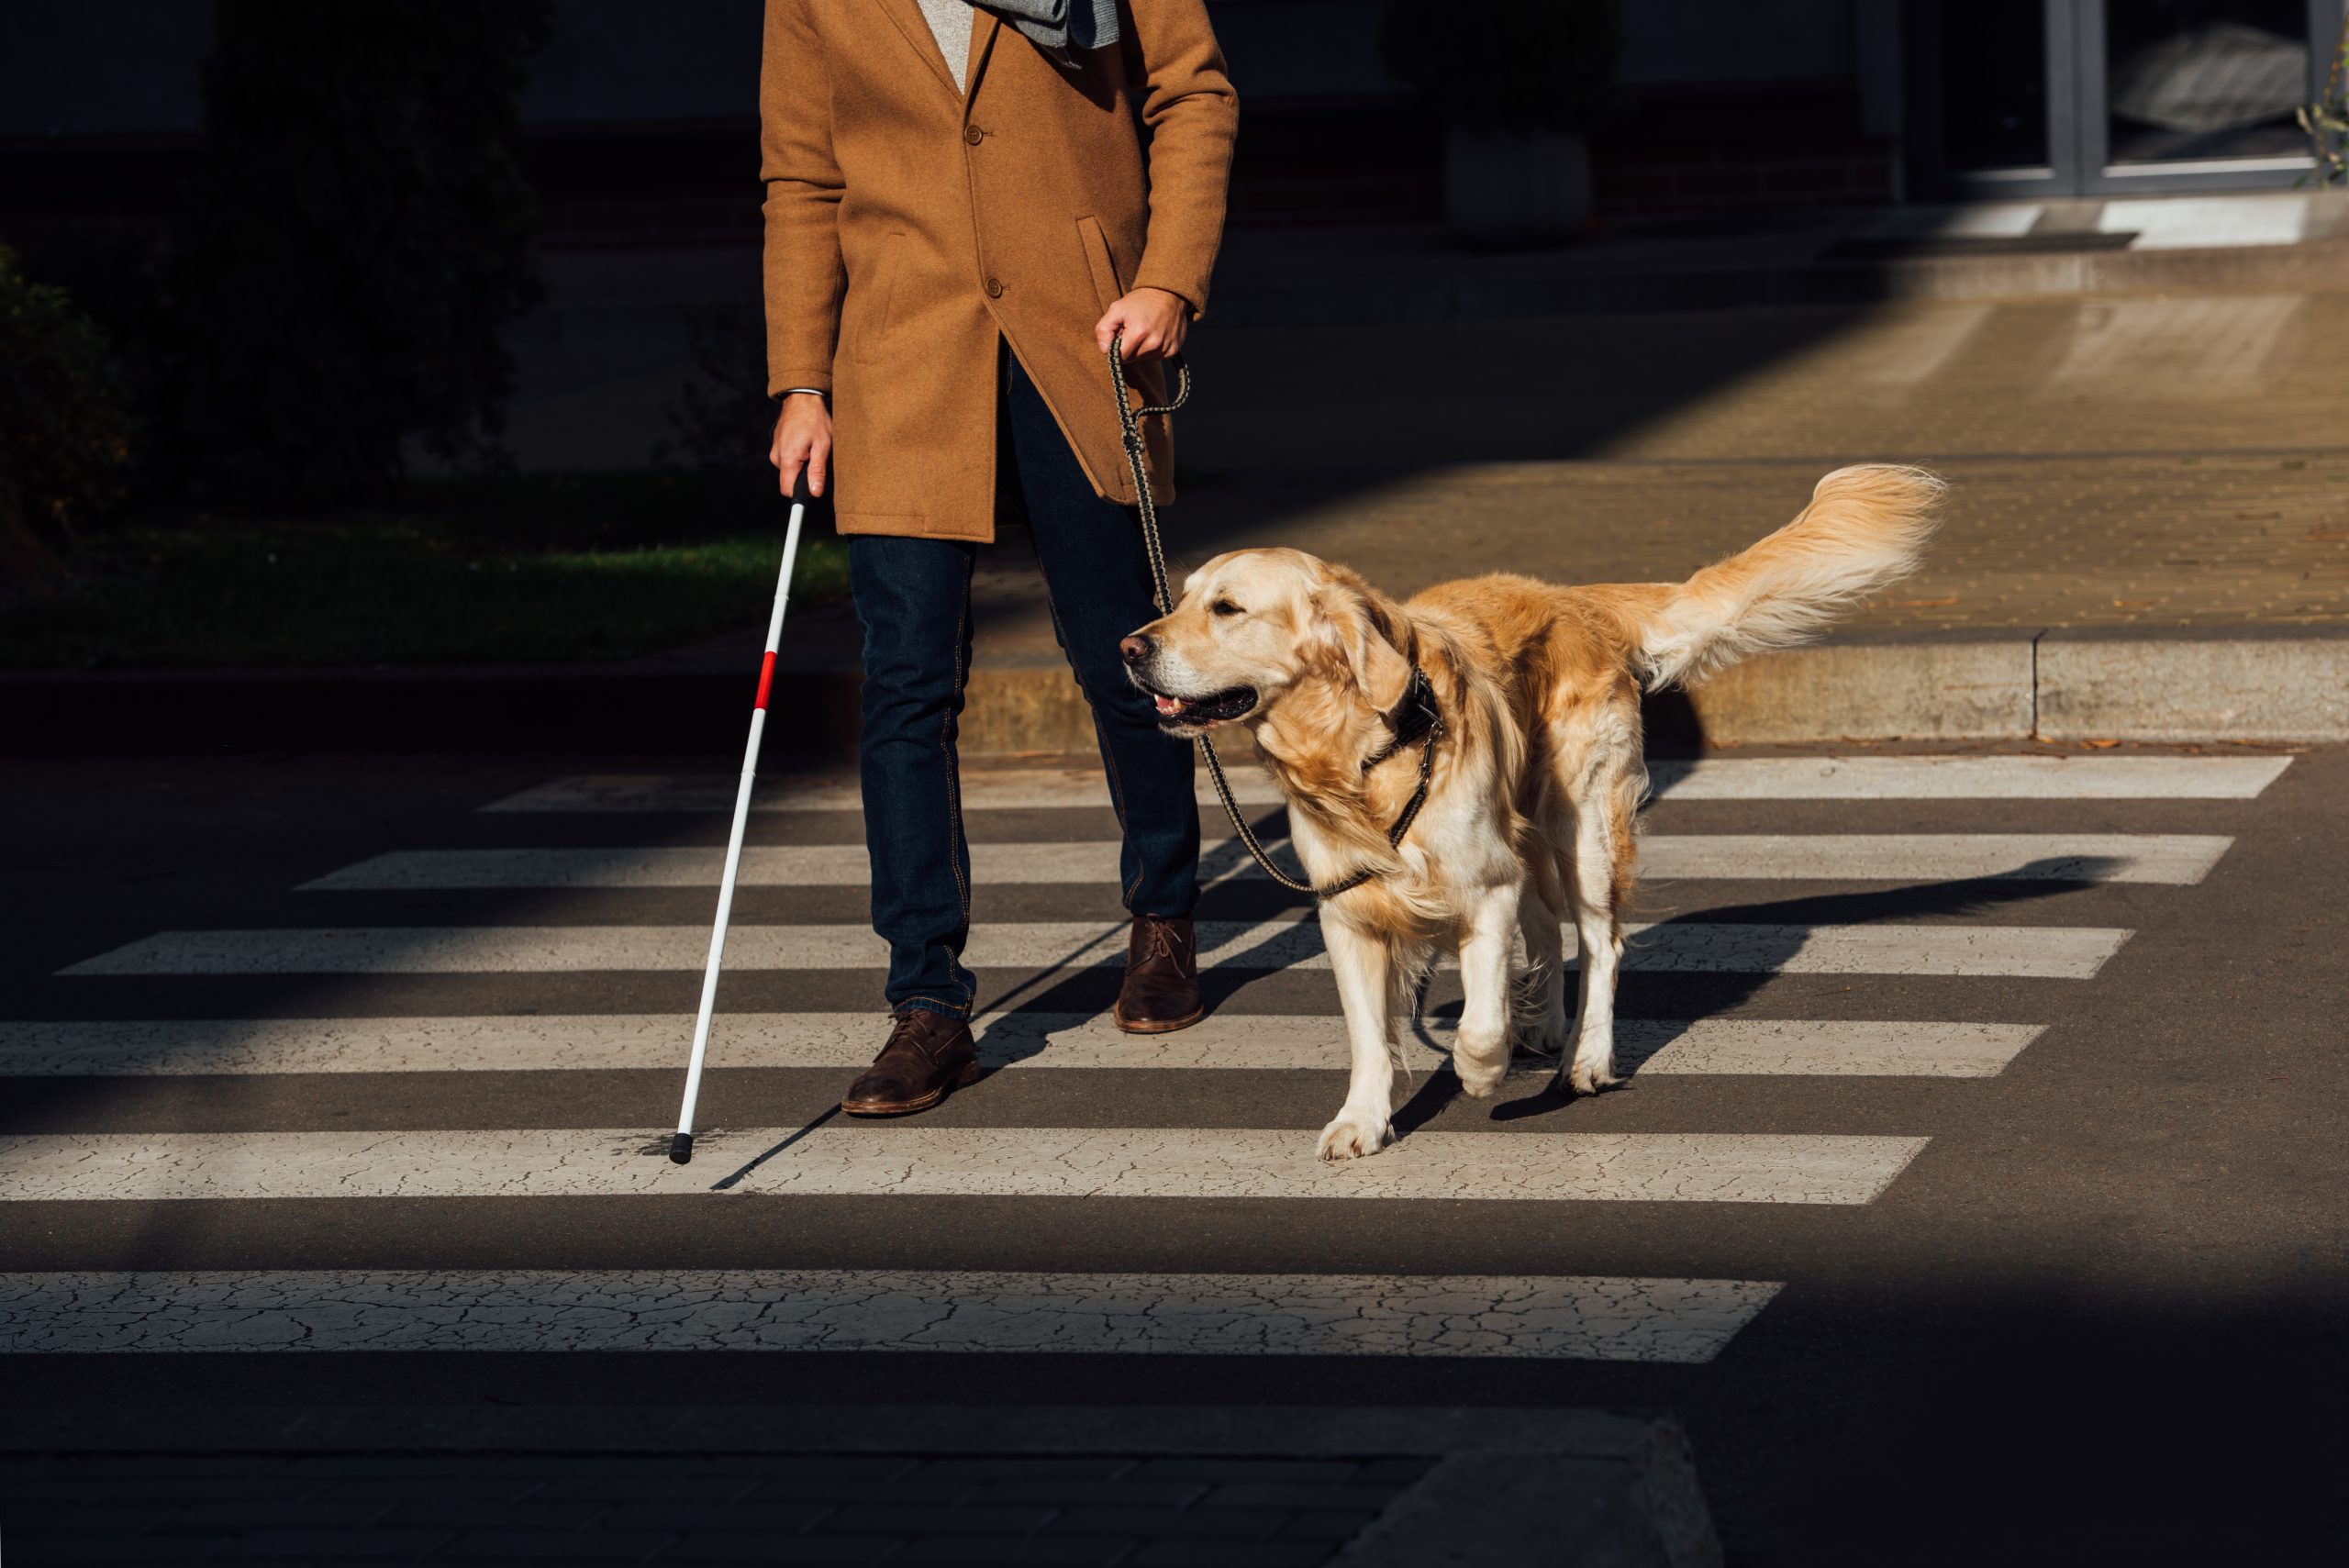 Blinde man met stok en geleidehond. FotoïStock / Light Field Studios